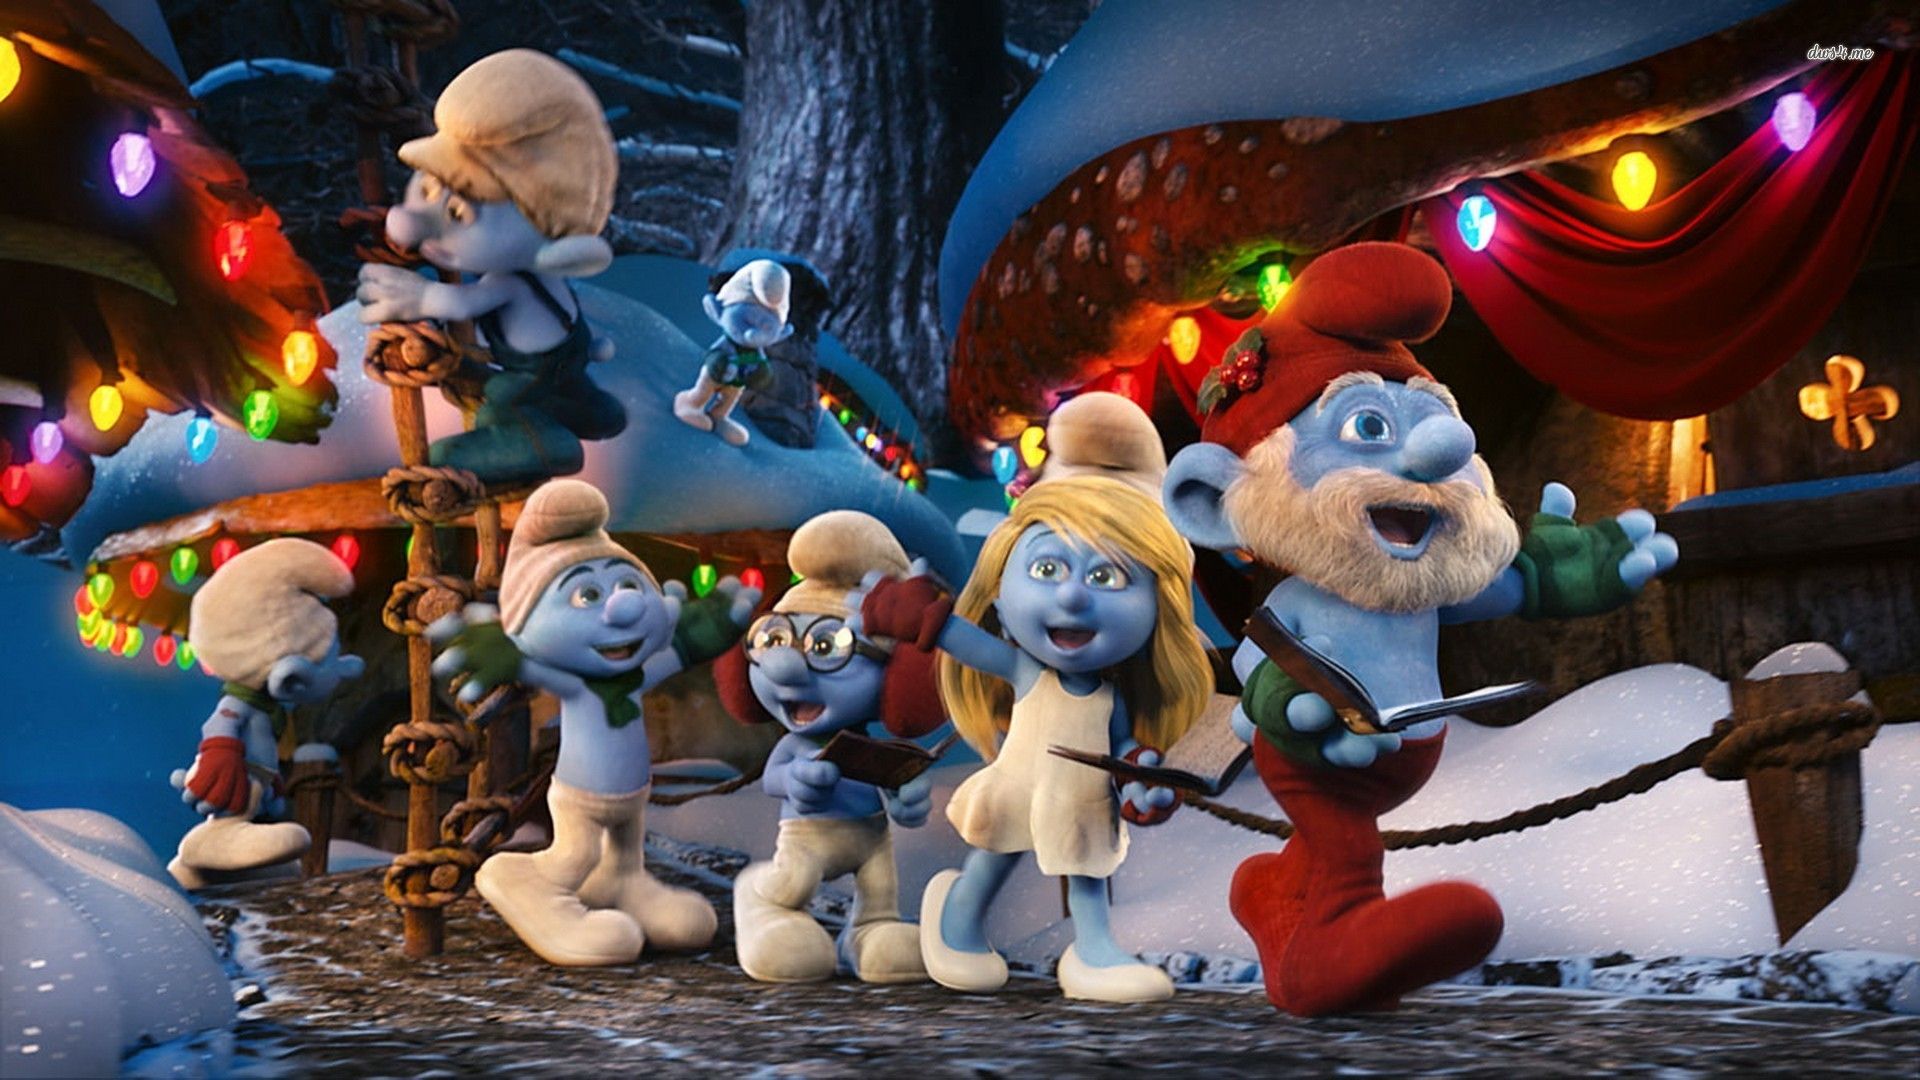 The Smurfs a Christmas Carol Image Wallpaper for Sony XPeria Z4